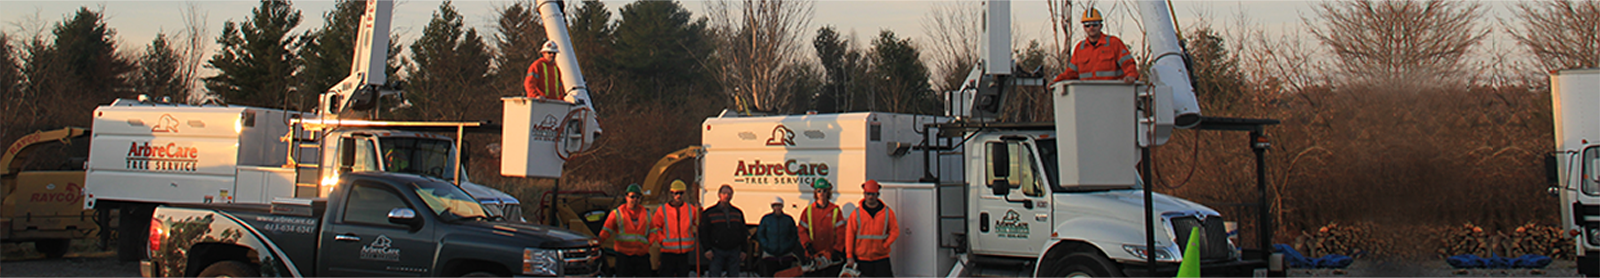 AbreCare team posing in and around work trucks